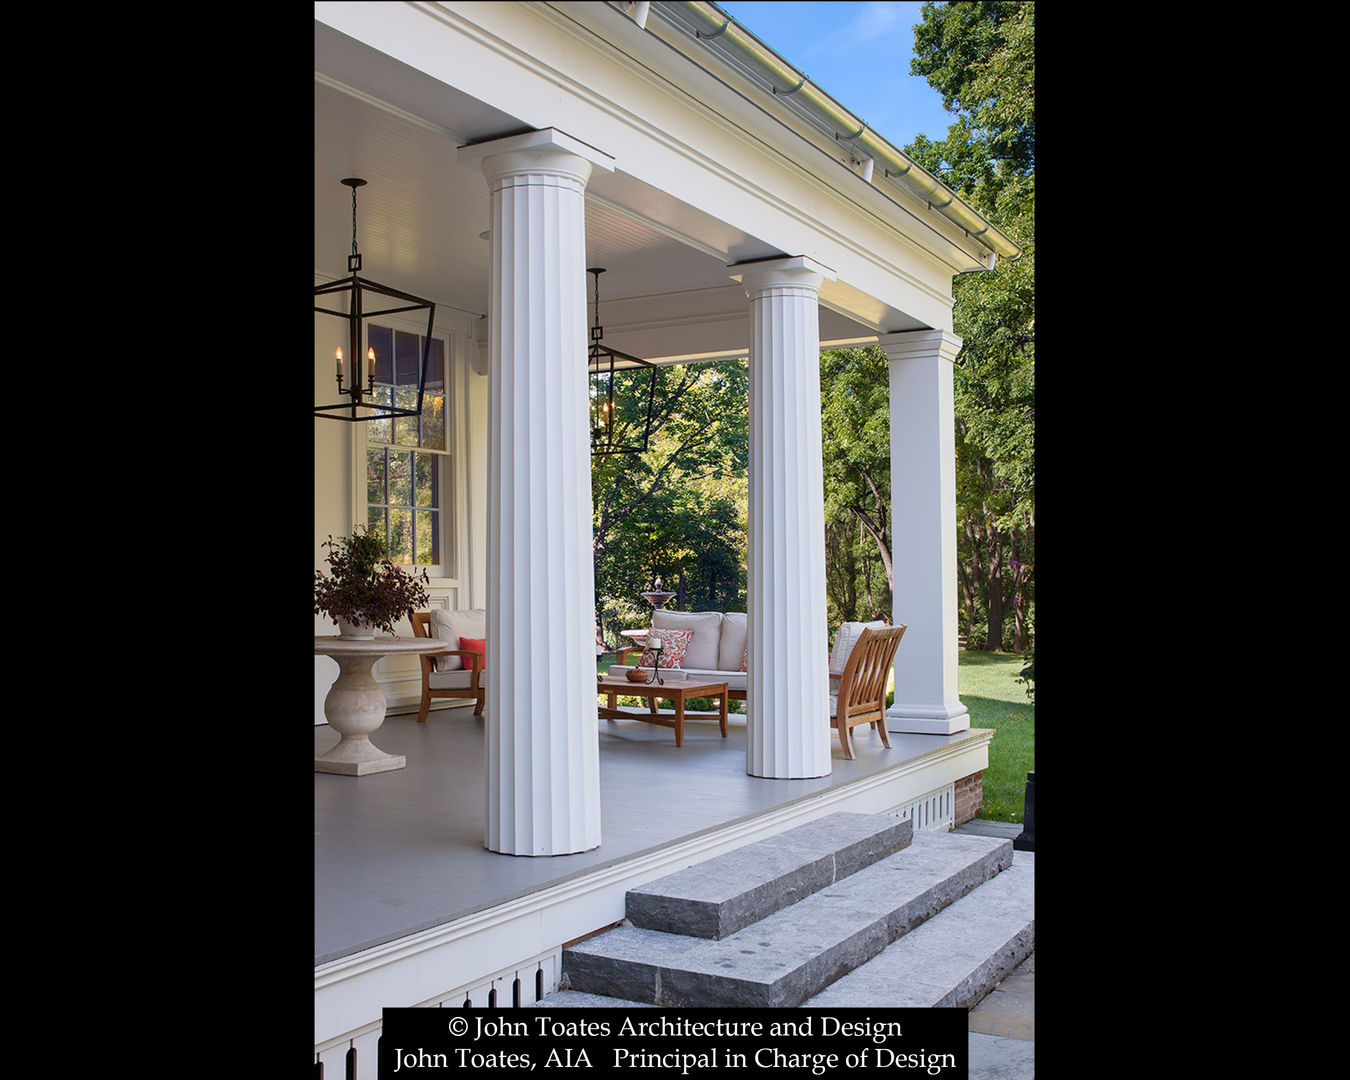 Porch Columns John Toates Architecture and Design Patios & Decks